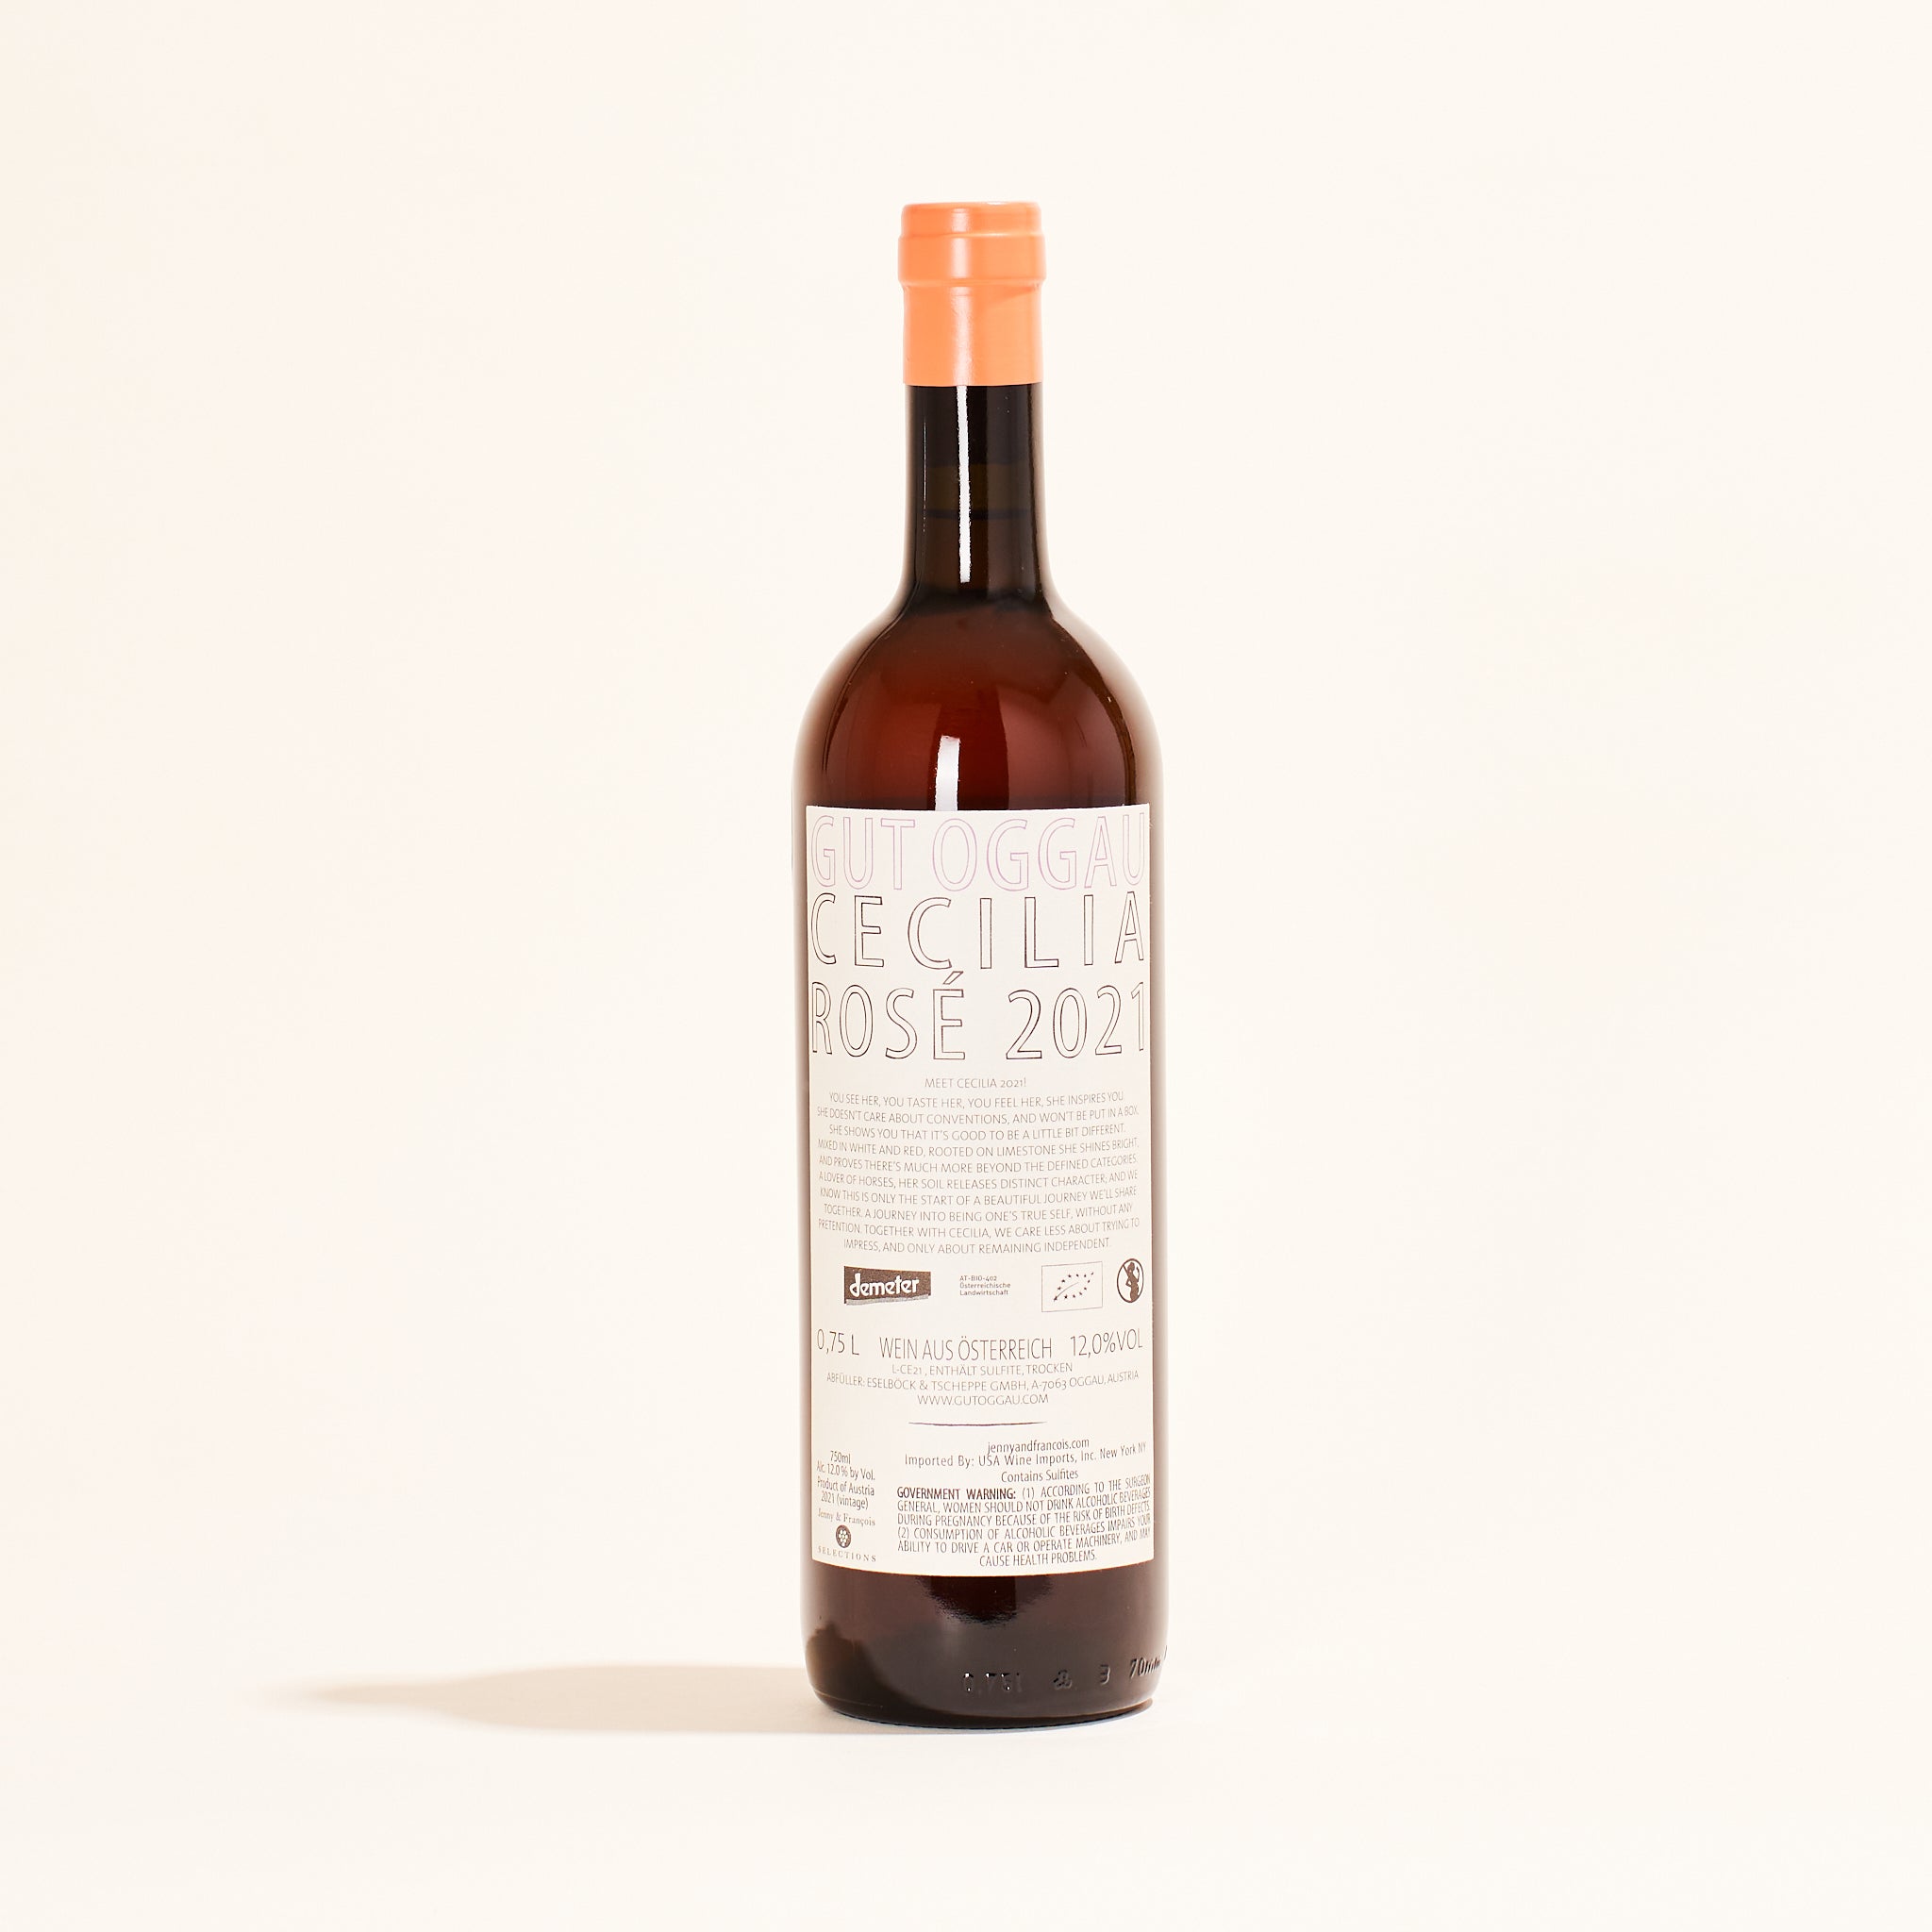 Gut Oggau Cecilia Gemischter Satz/Field Blend natural Rosé wine Burgenland, Austria  back label